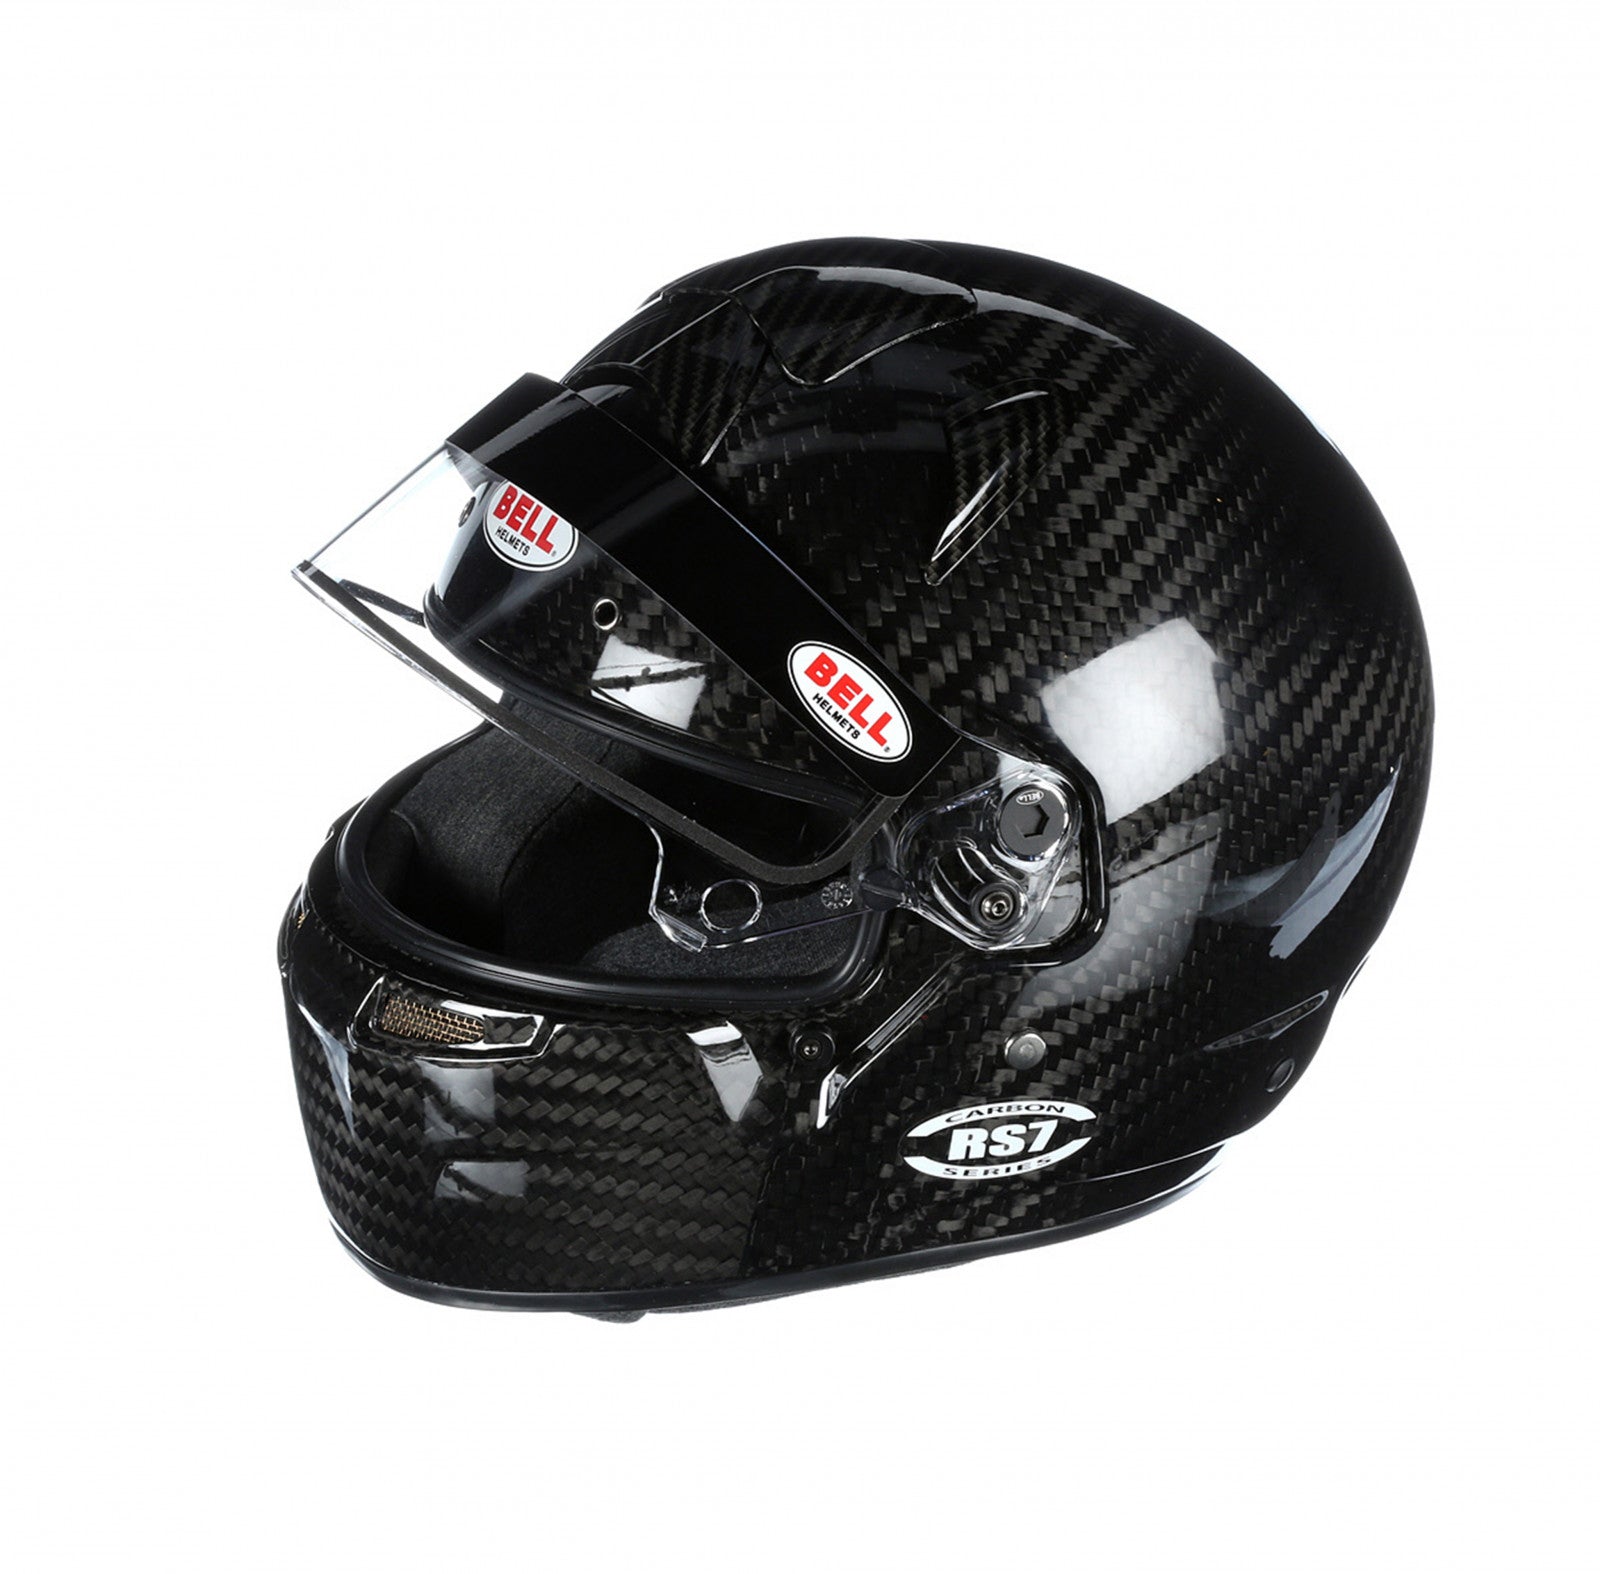 Bell RS7 Carbon Helmet Size 58 cm